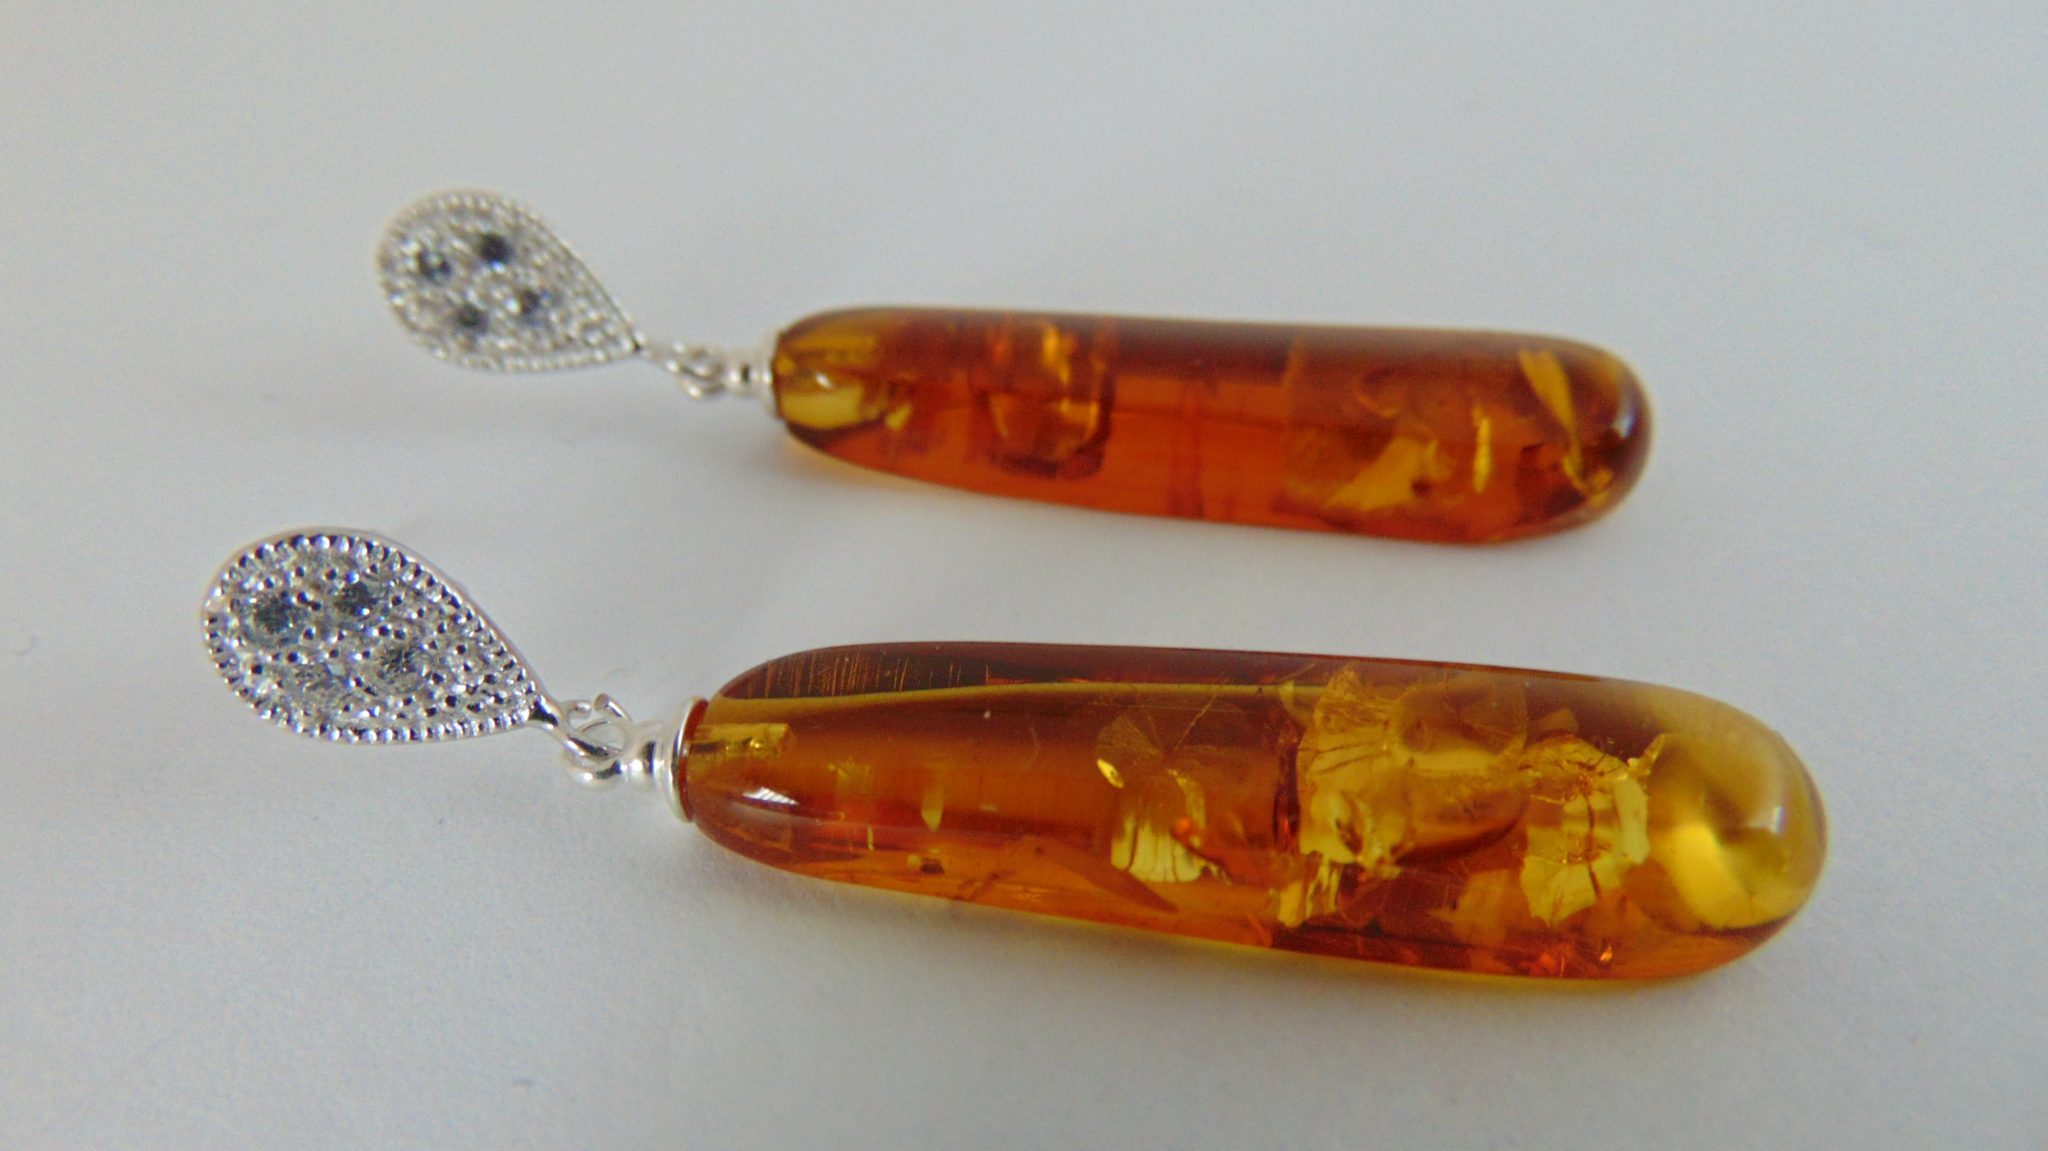 Natural amber medium large unique drop shape earrings handmade sterling silver 925 free form orange white color genuine original earrings